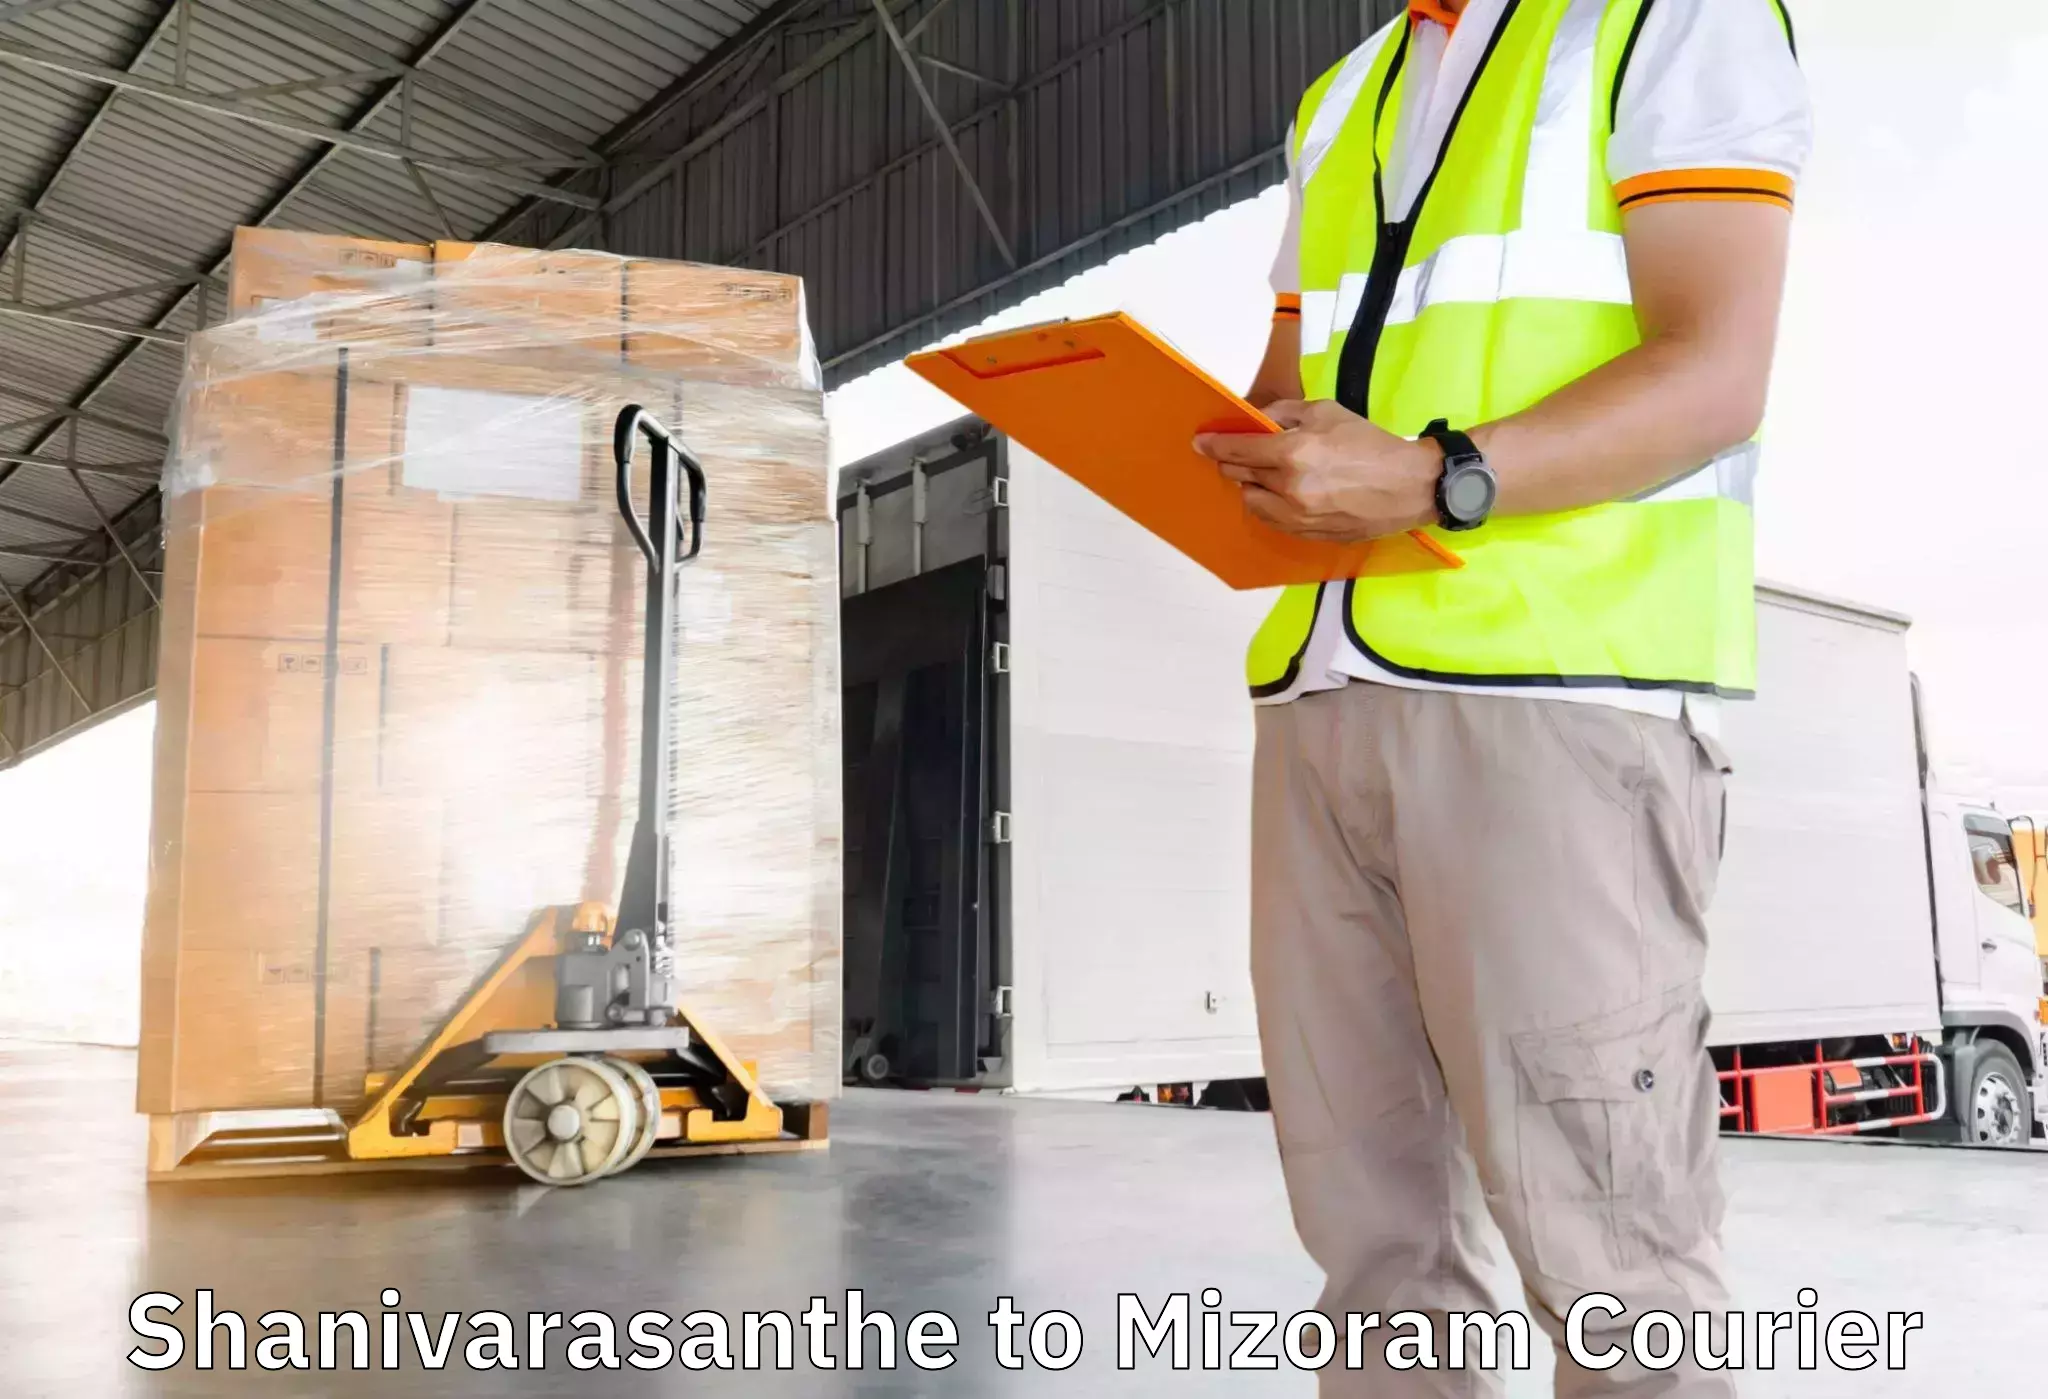 Furniture moving specialists Shanivarasanthe to Mizoram